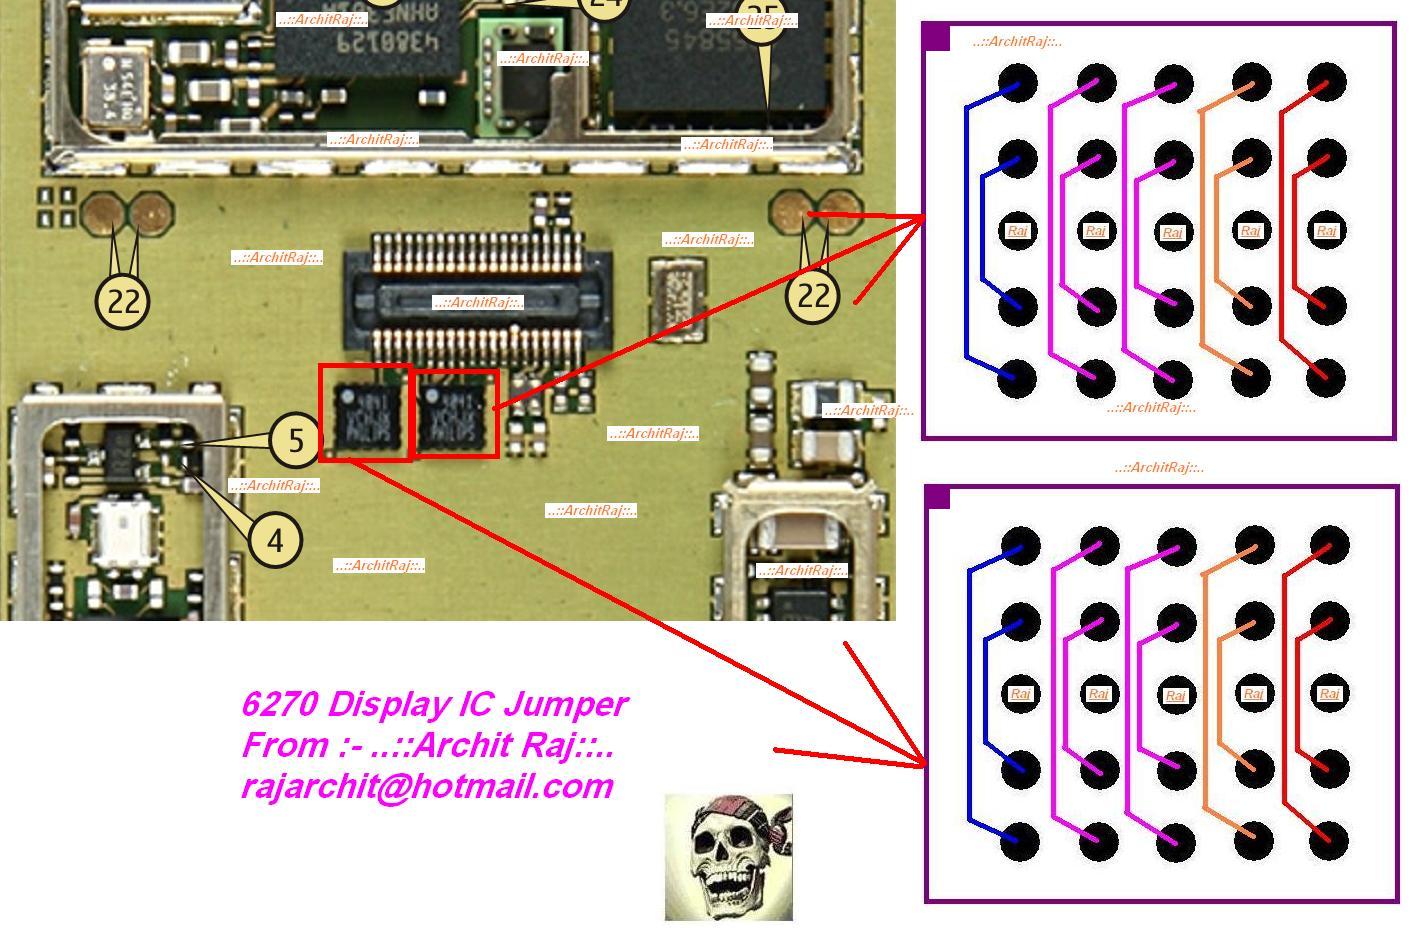 6270 Display IC Jumper - Life Telecommunications